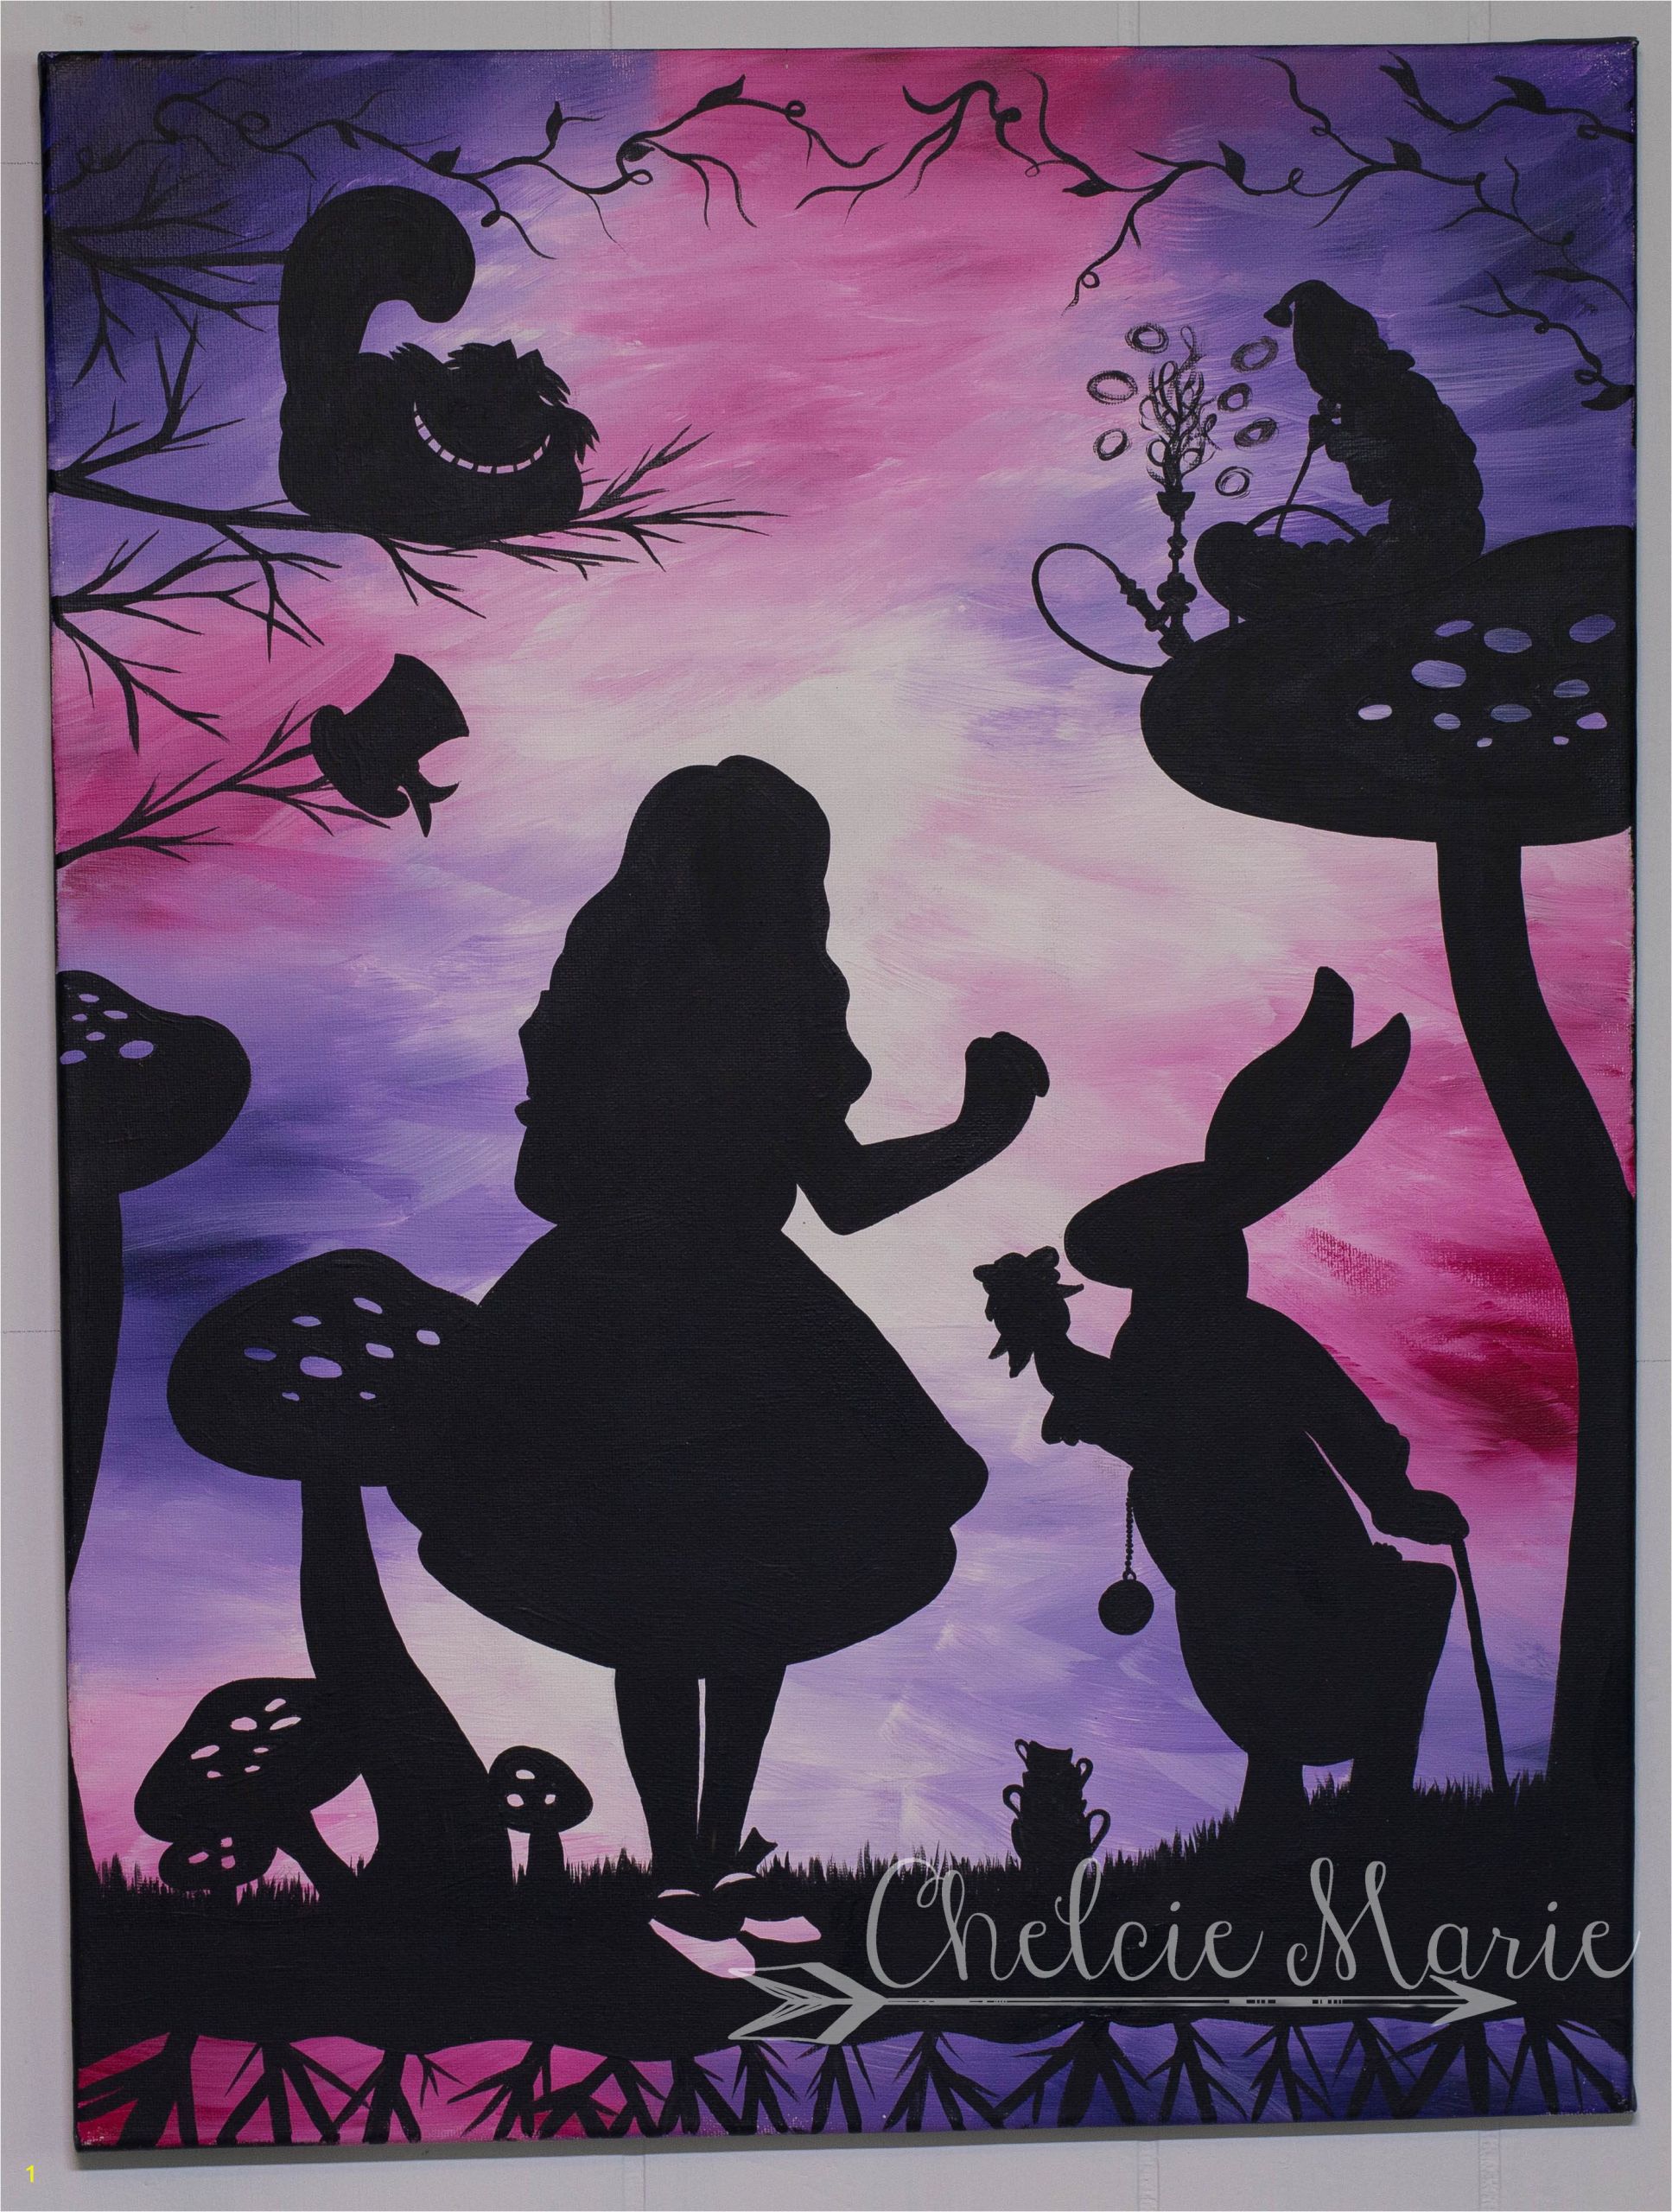 Hand Painted Disney Wall Murals Alice In Wonderland Art for Sale original Hand Painted